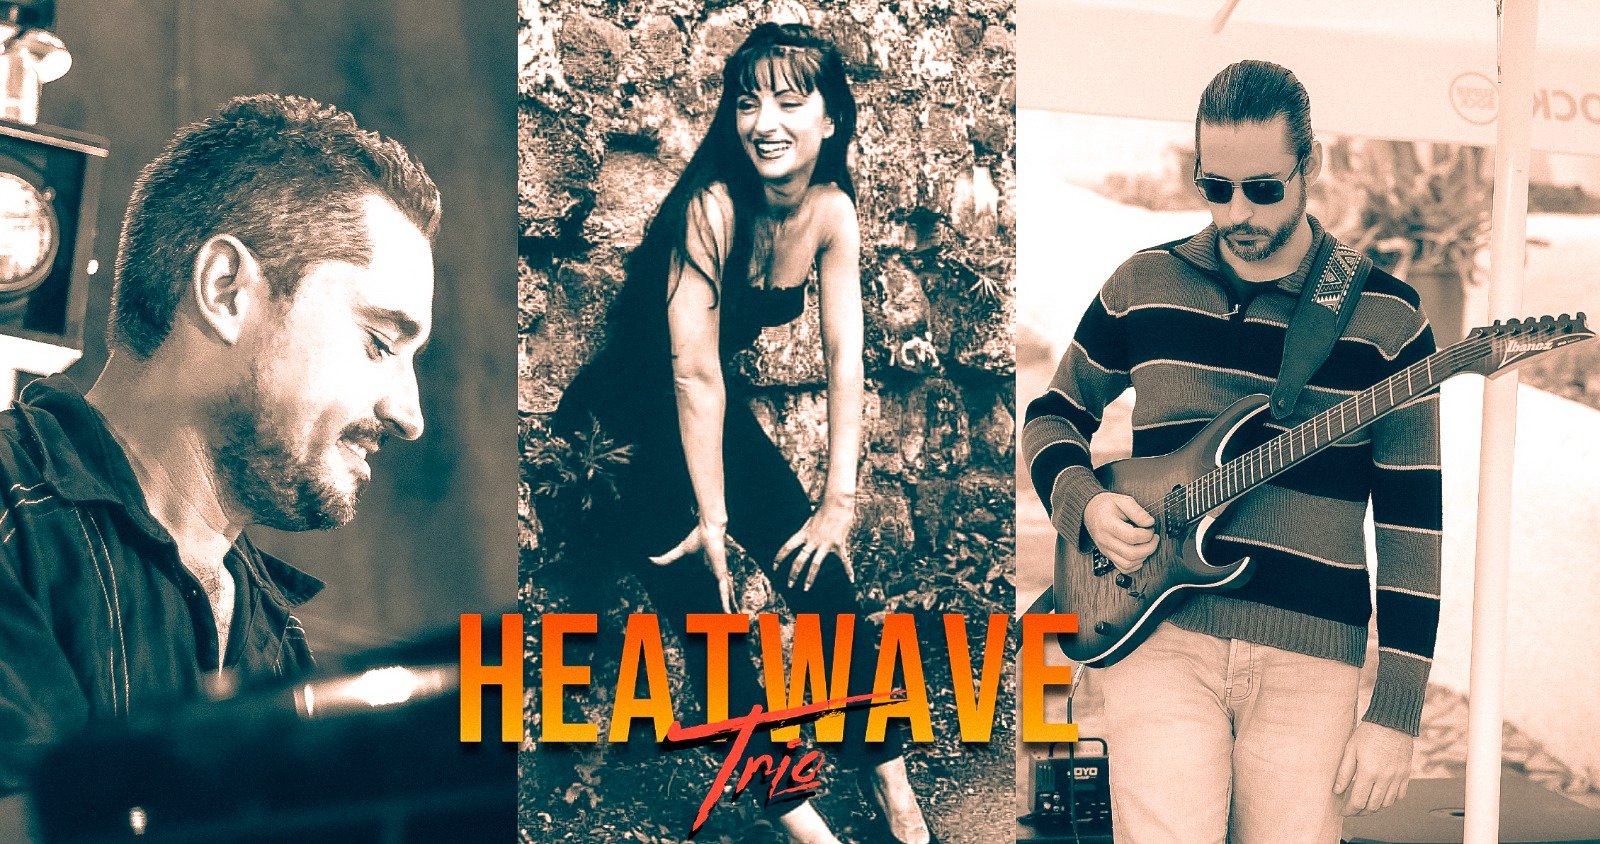 Heatwave trio with singer Dina Aires